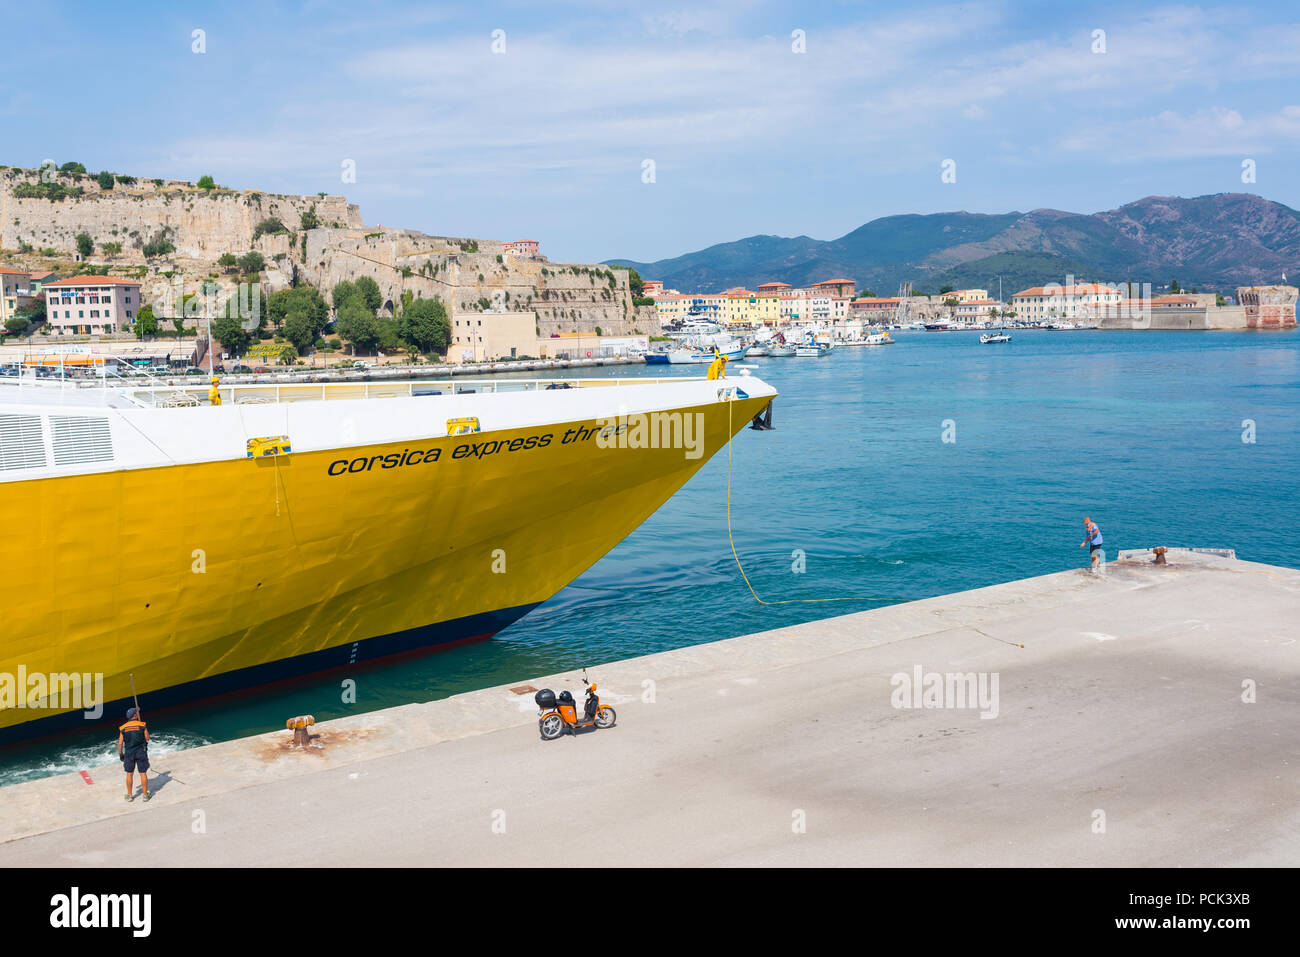 The Corsica ferries fast passenger ferry arrives at Portoferraio harbour, Elba island, Tuscany, Italy Stock Photo